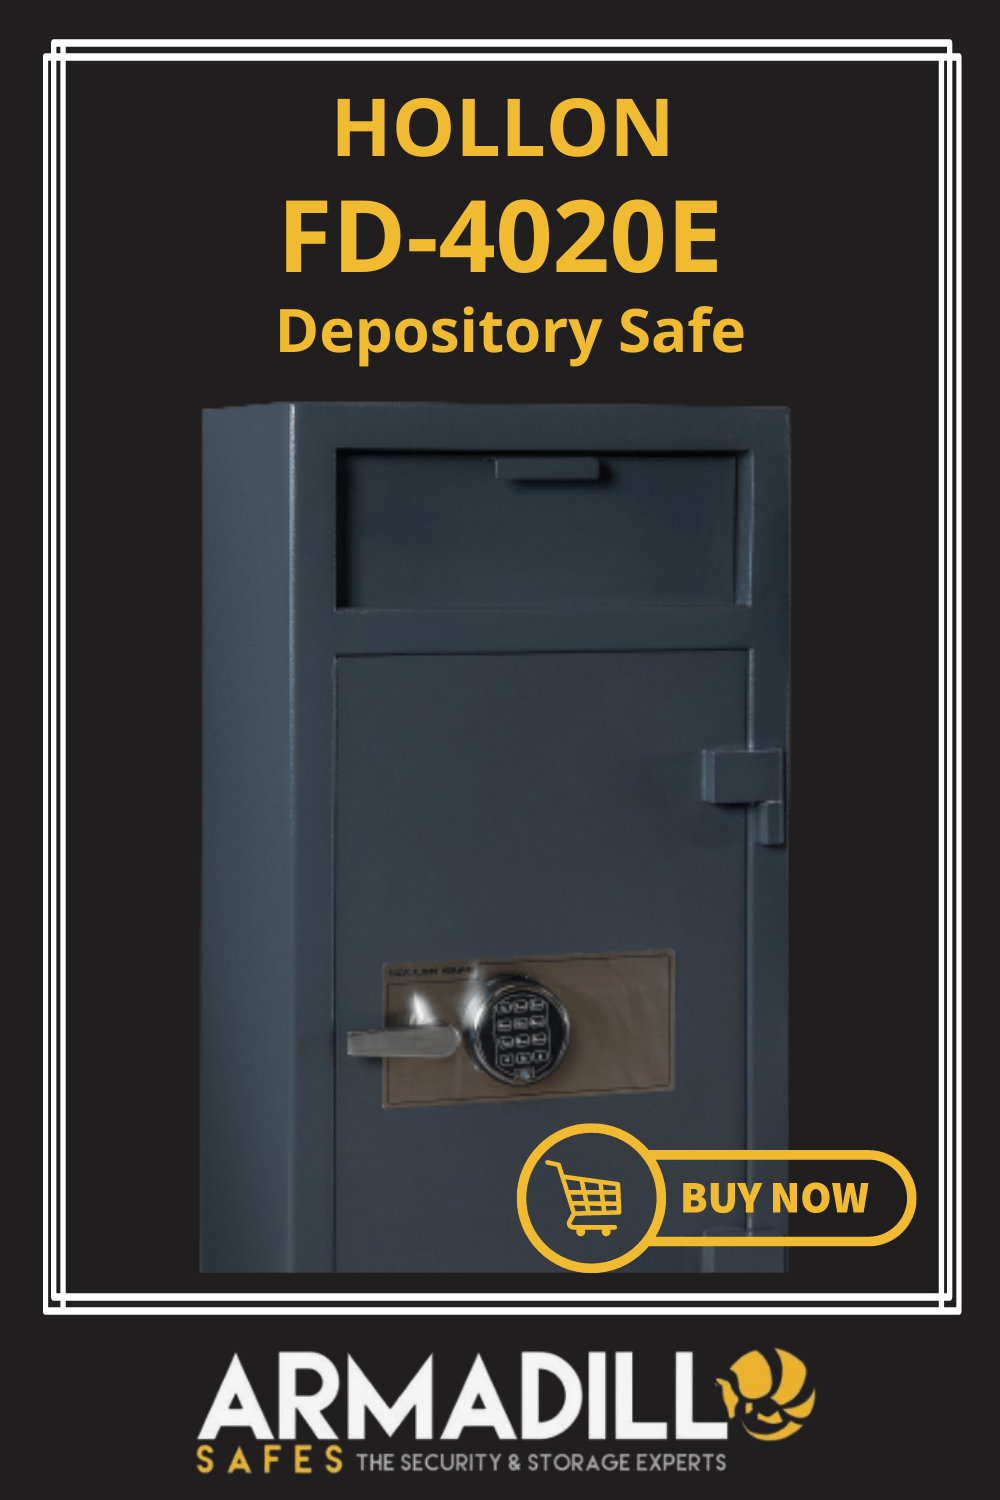 Hollon FD-4020E Depository Safe Armadillo Safe and Vault